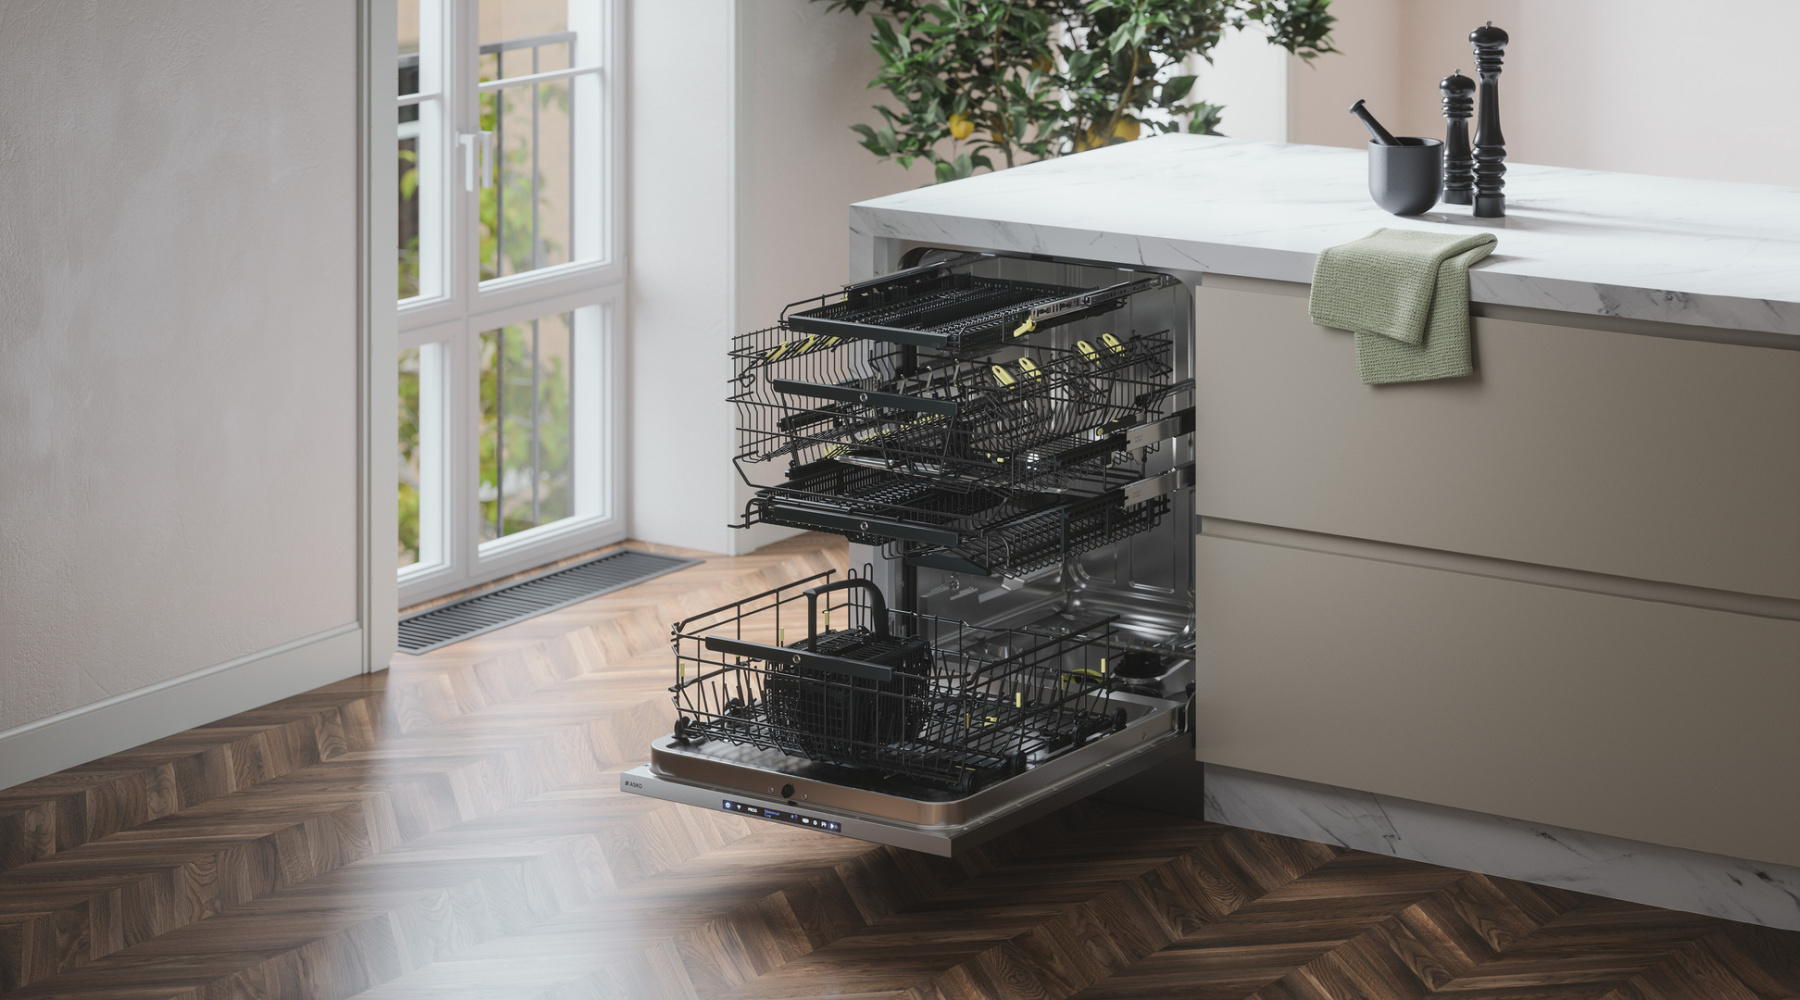 asko-amb-kitchen-dishwasher-dw60-extended-exclusive-baskets-v01-no-dishes-1d-16-9.jpg